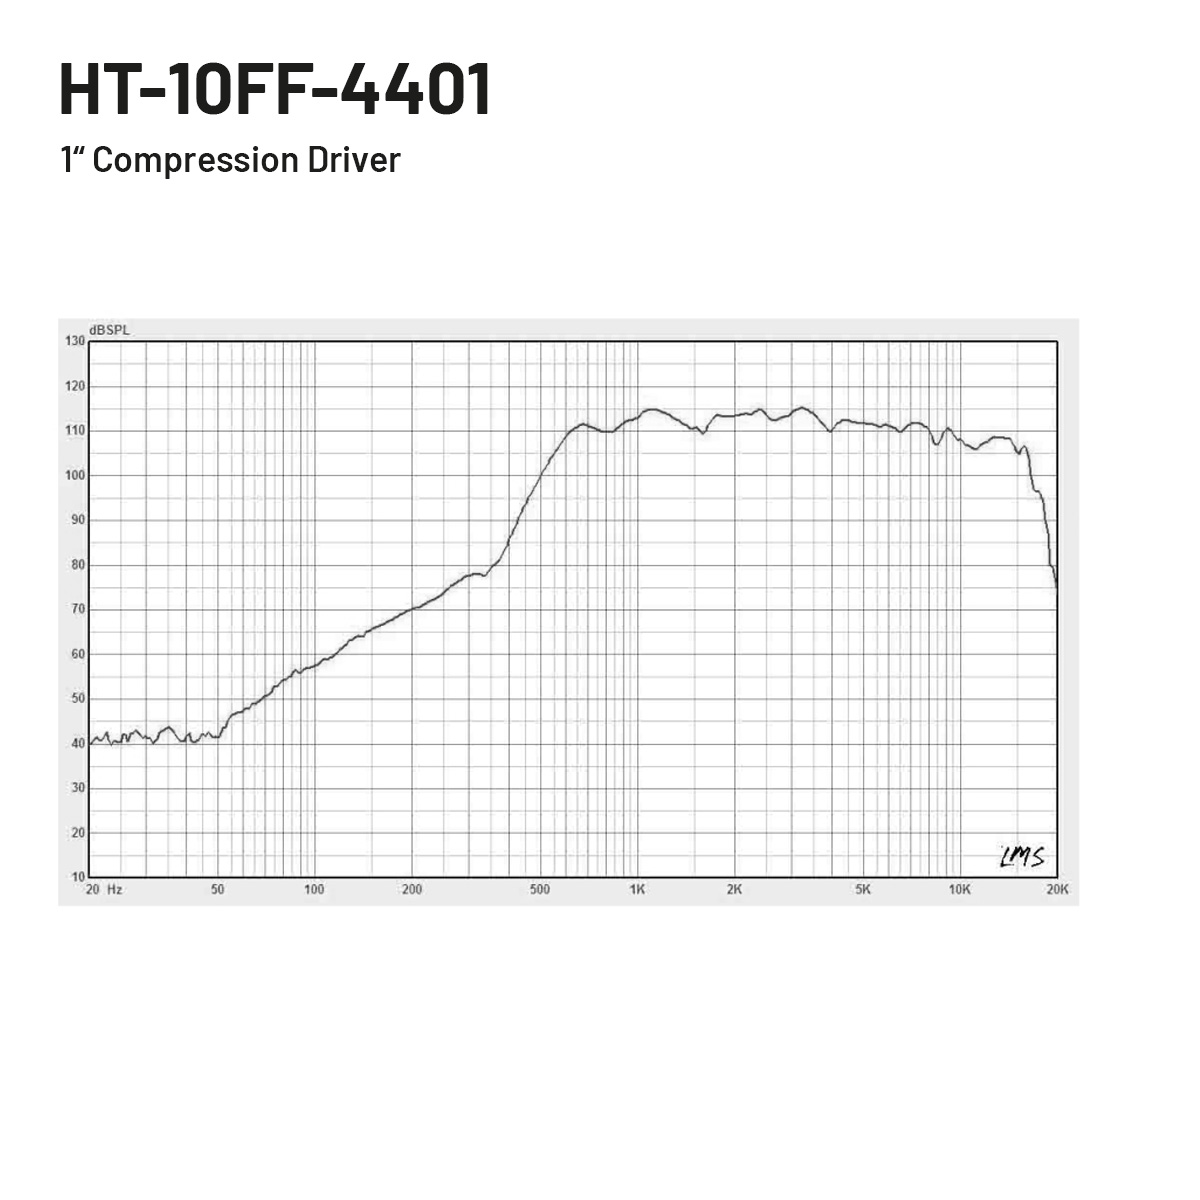 HT-10FF-4401-04